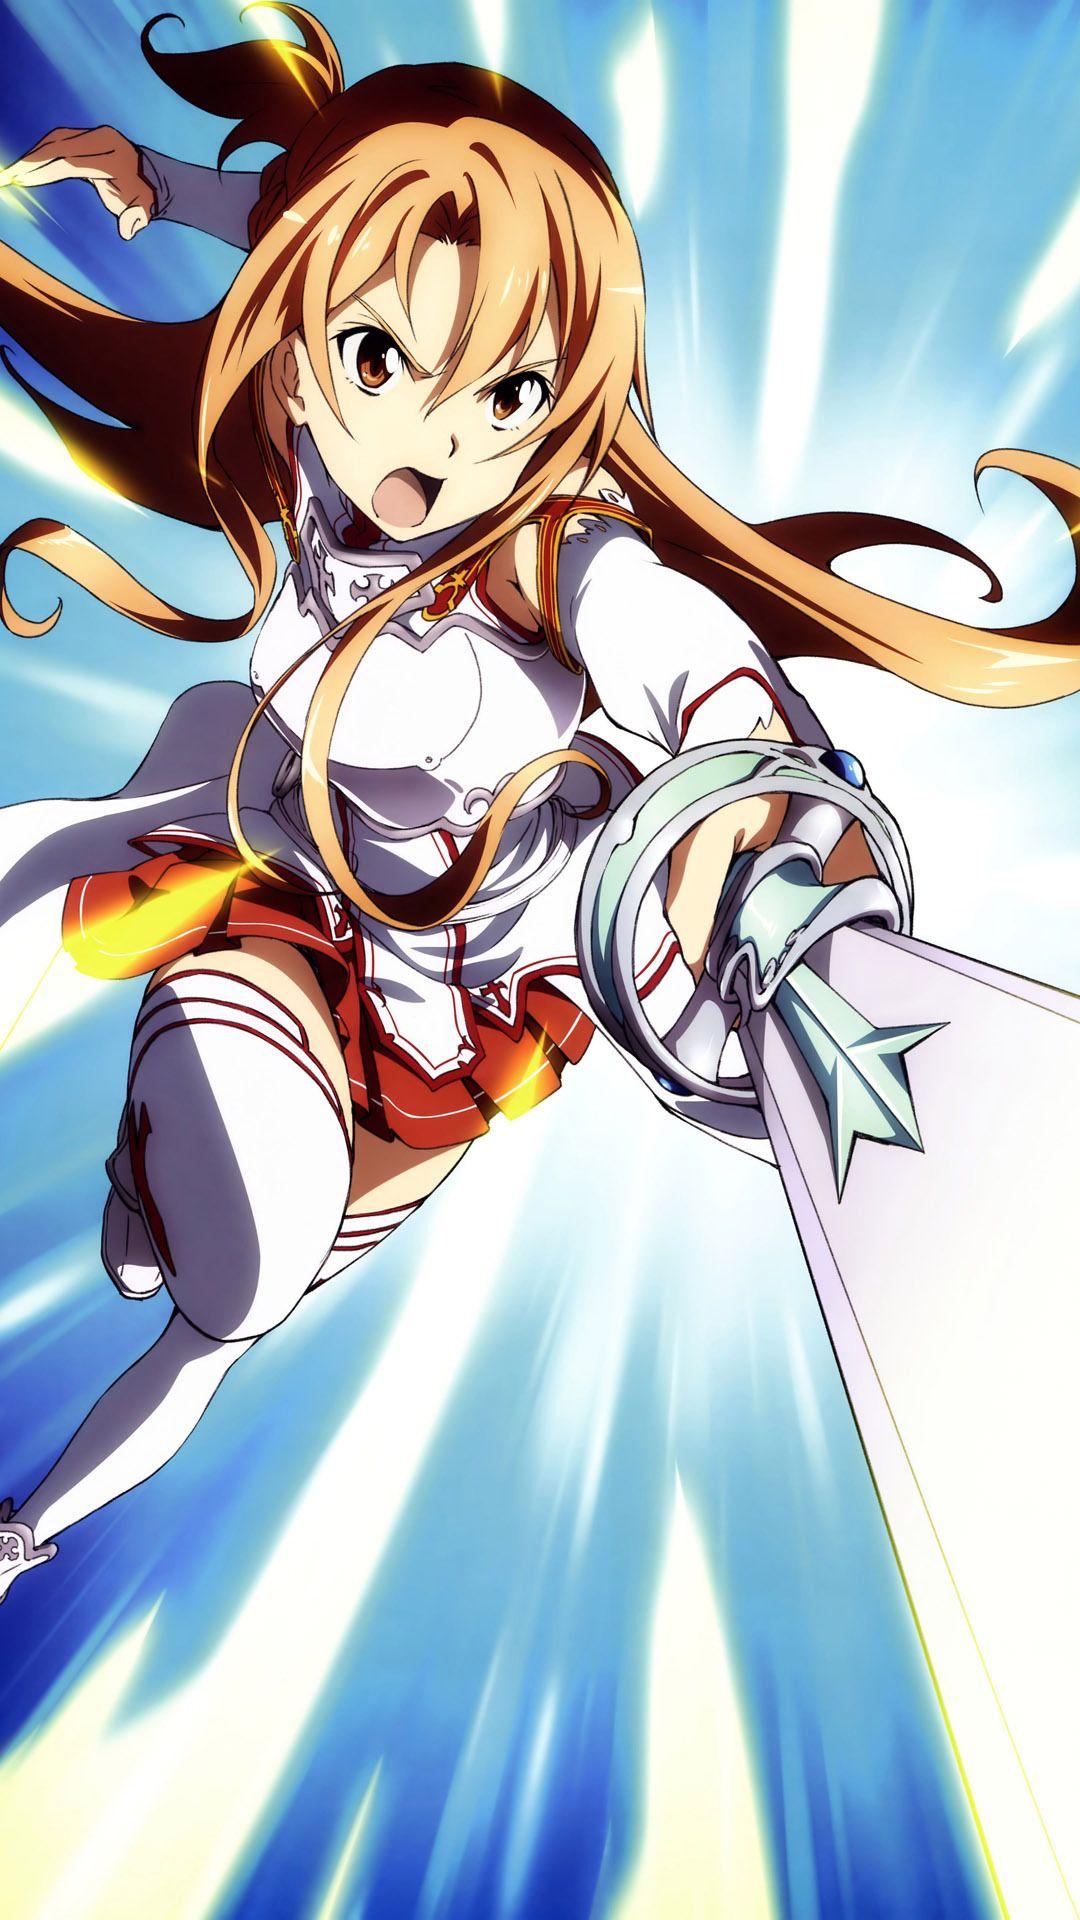 Asuna Sword Art Online Anime Mobile Wallpaper 1080x1920 8492